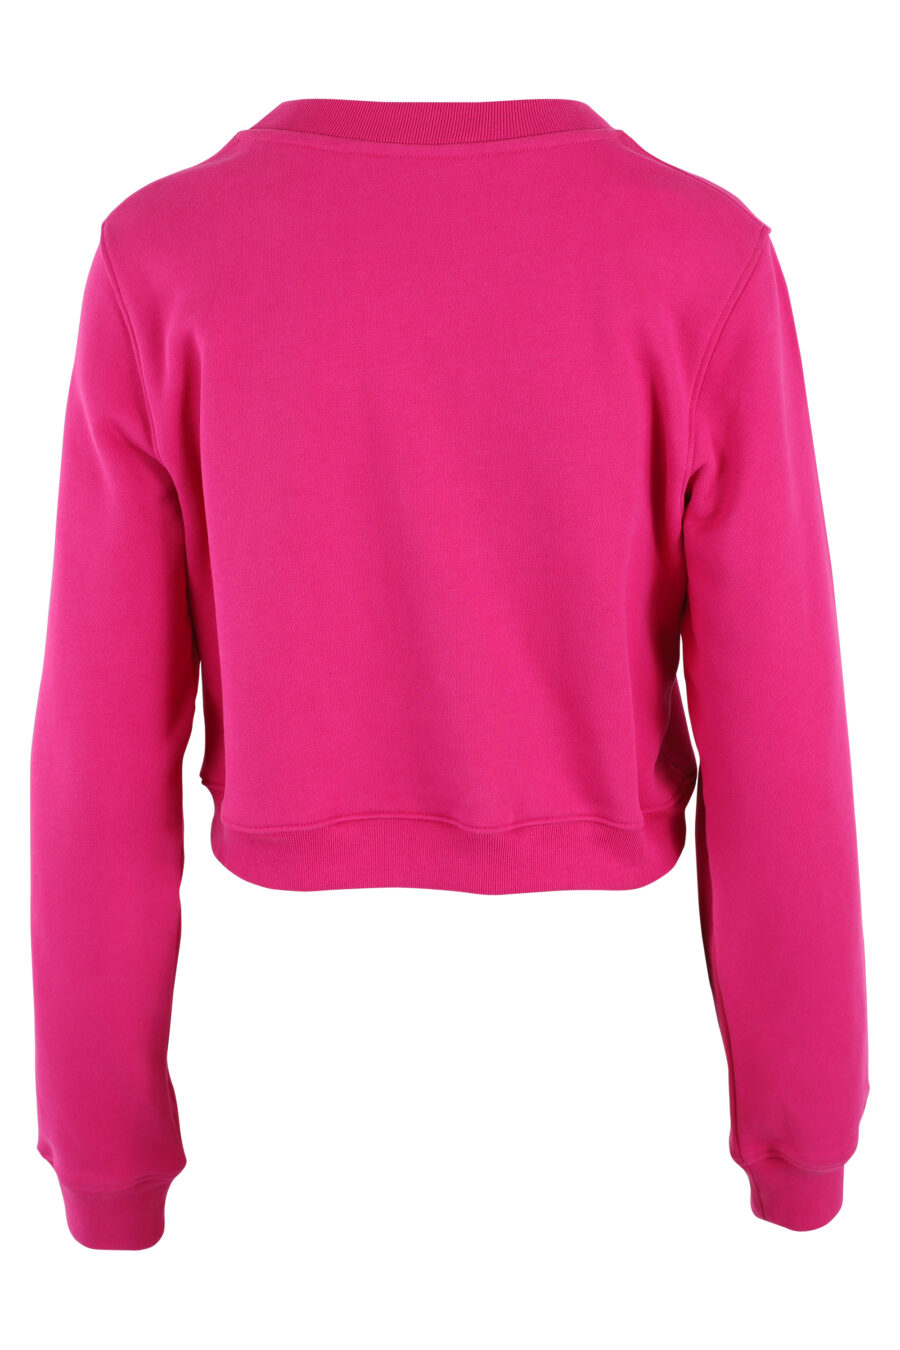 Short fuchsia sweatshirt with bear shield - IMG 5033